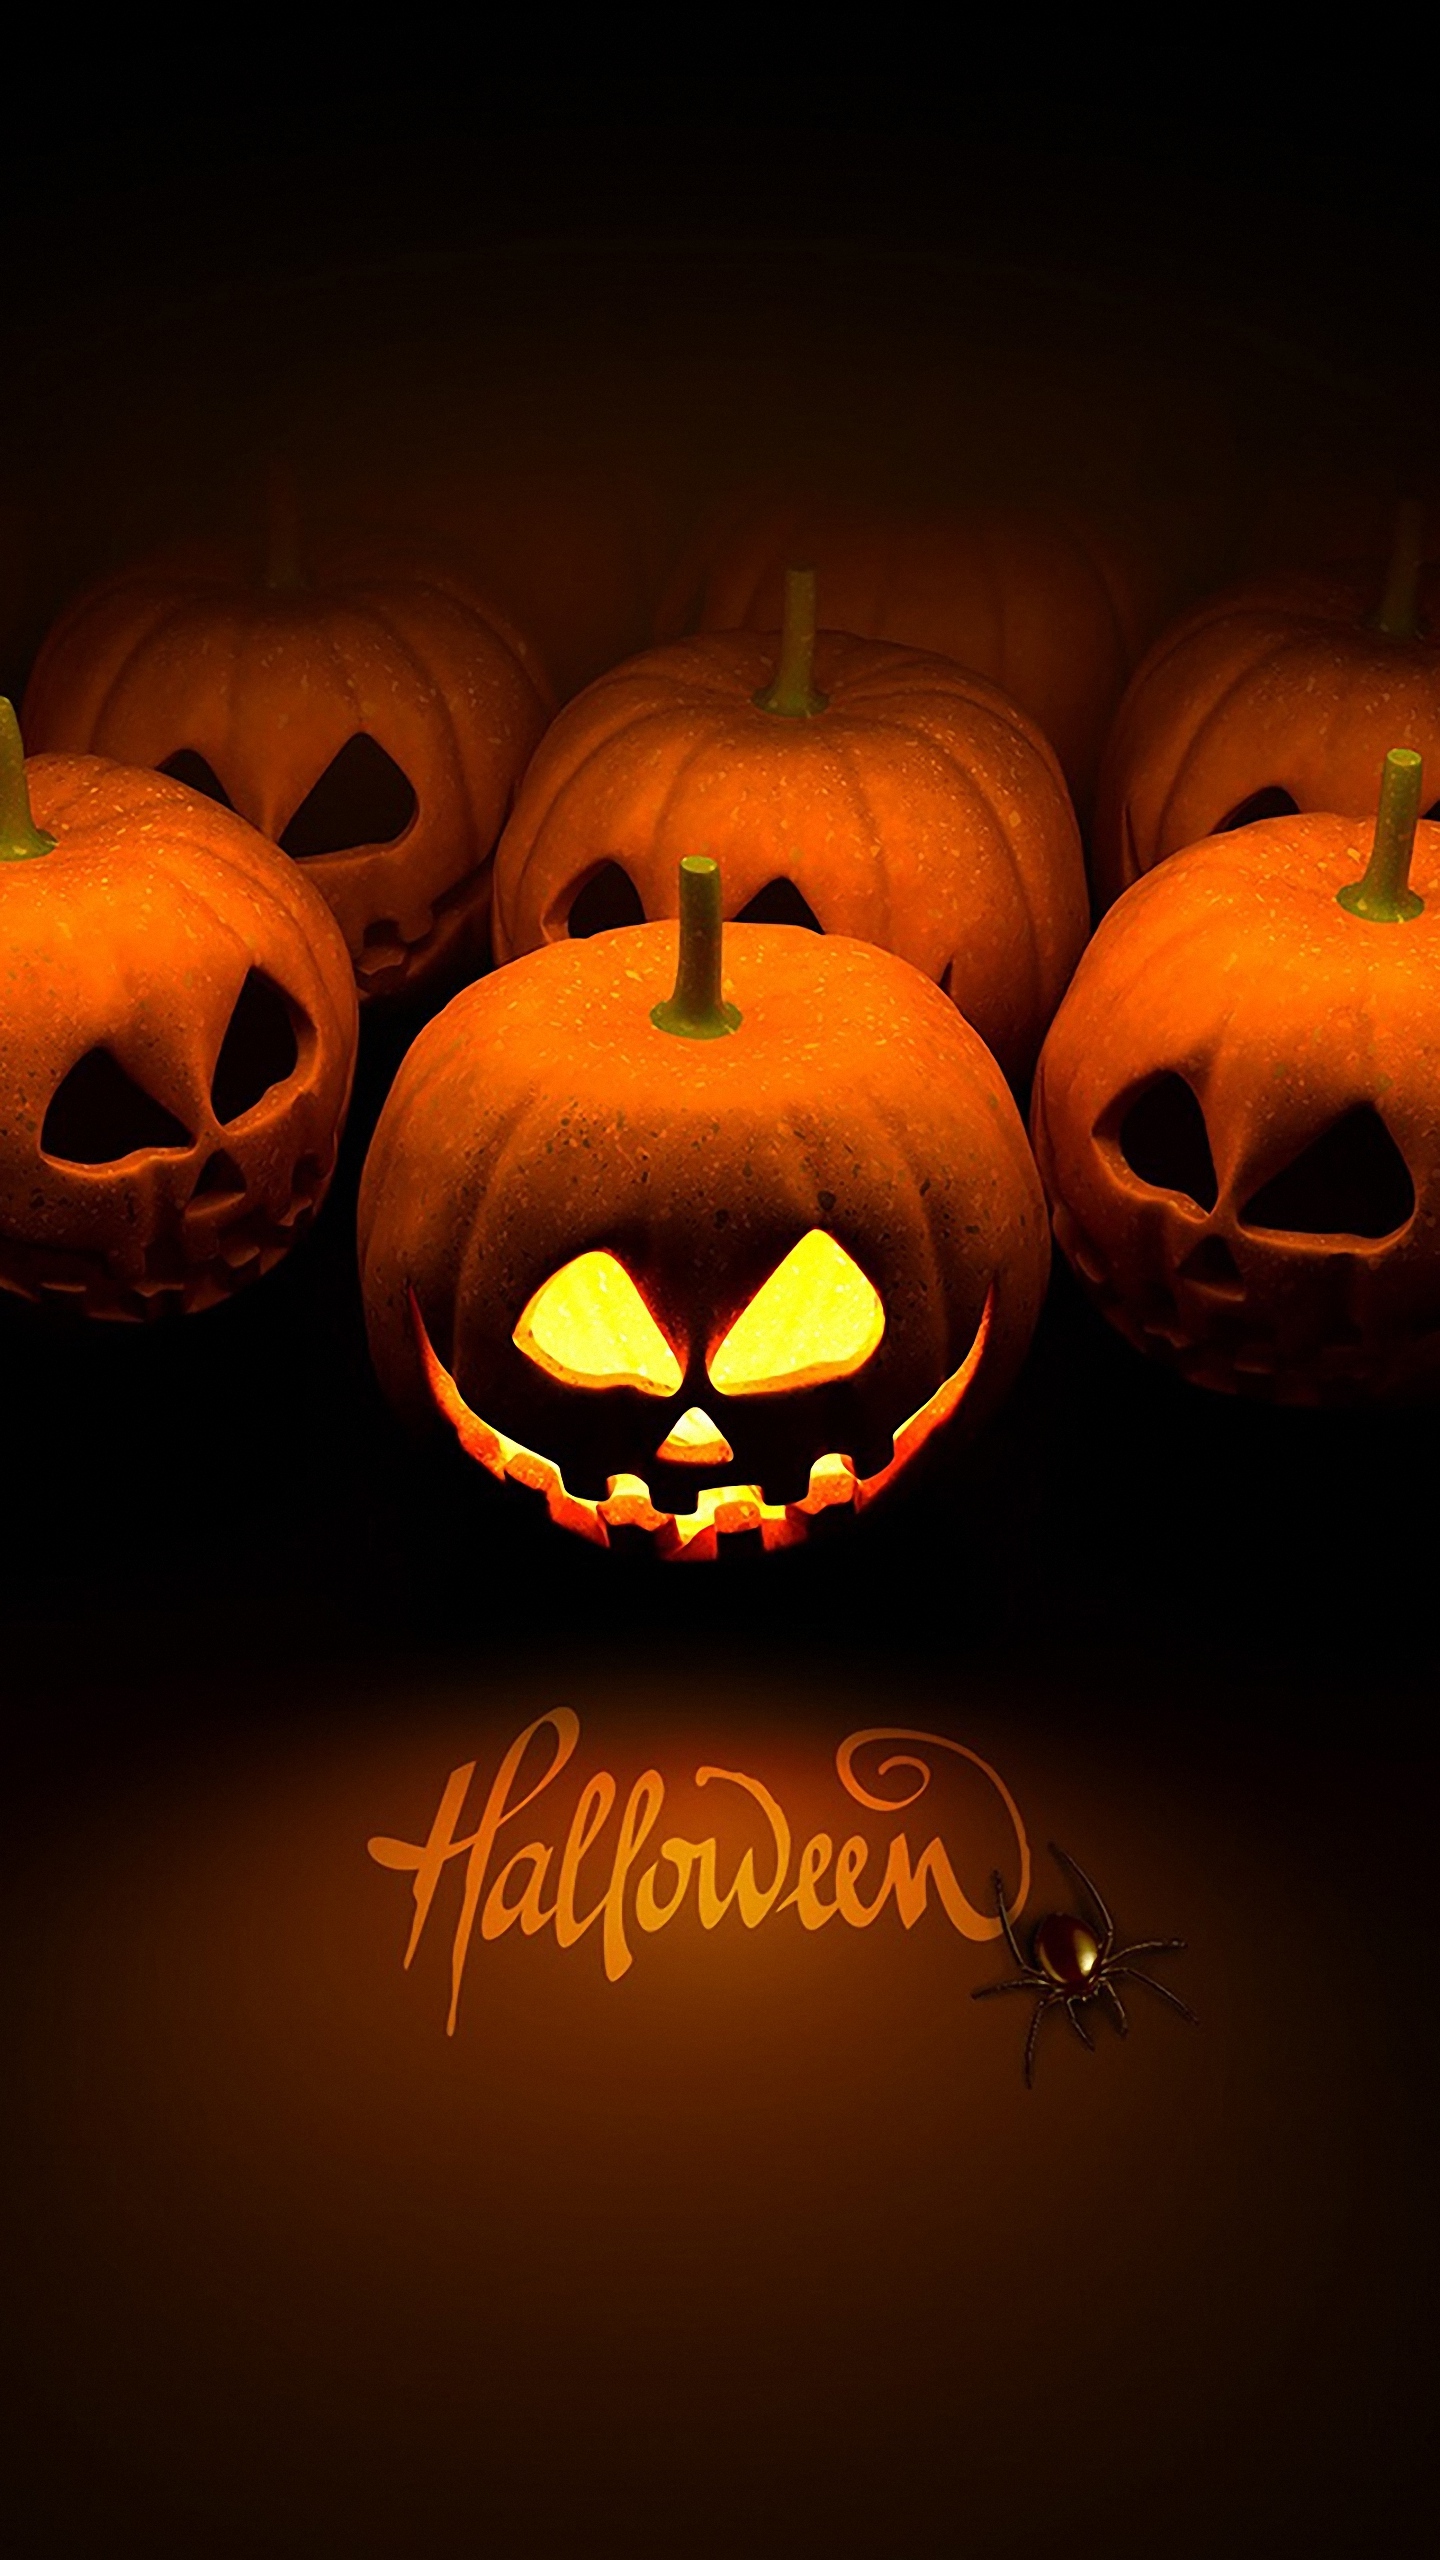 Free download your lg g3 HD 1440x2560 halloween pumpkin lg